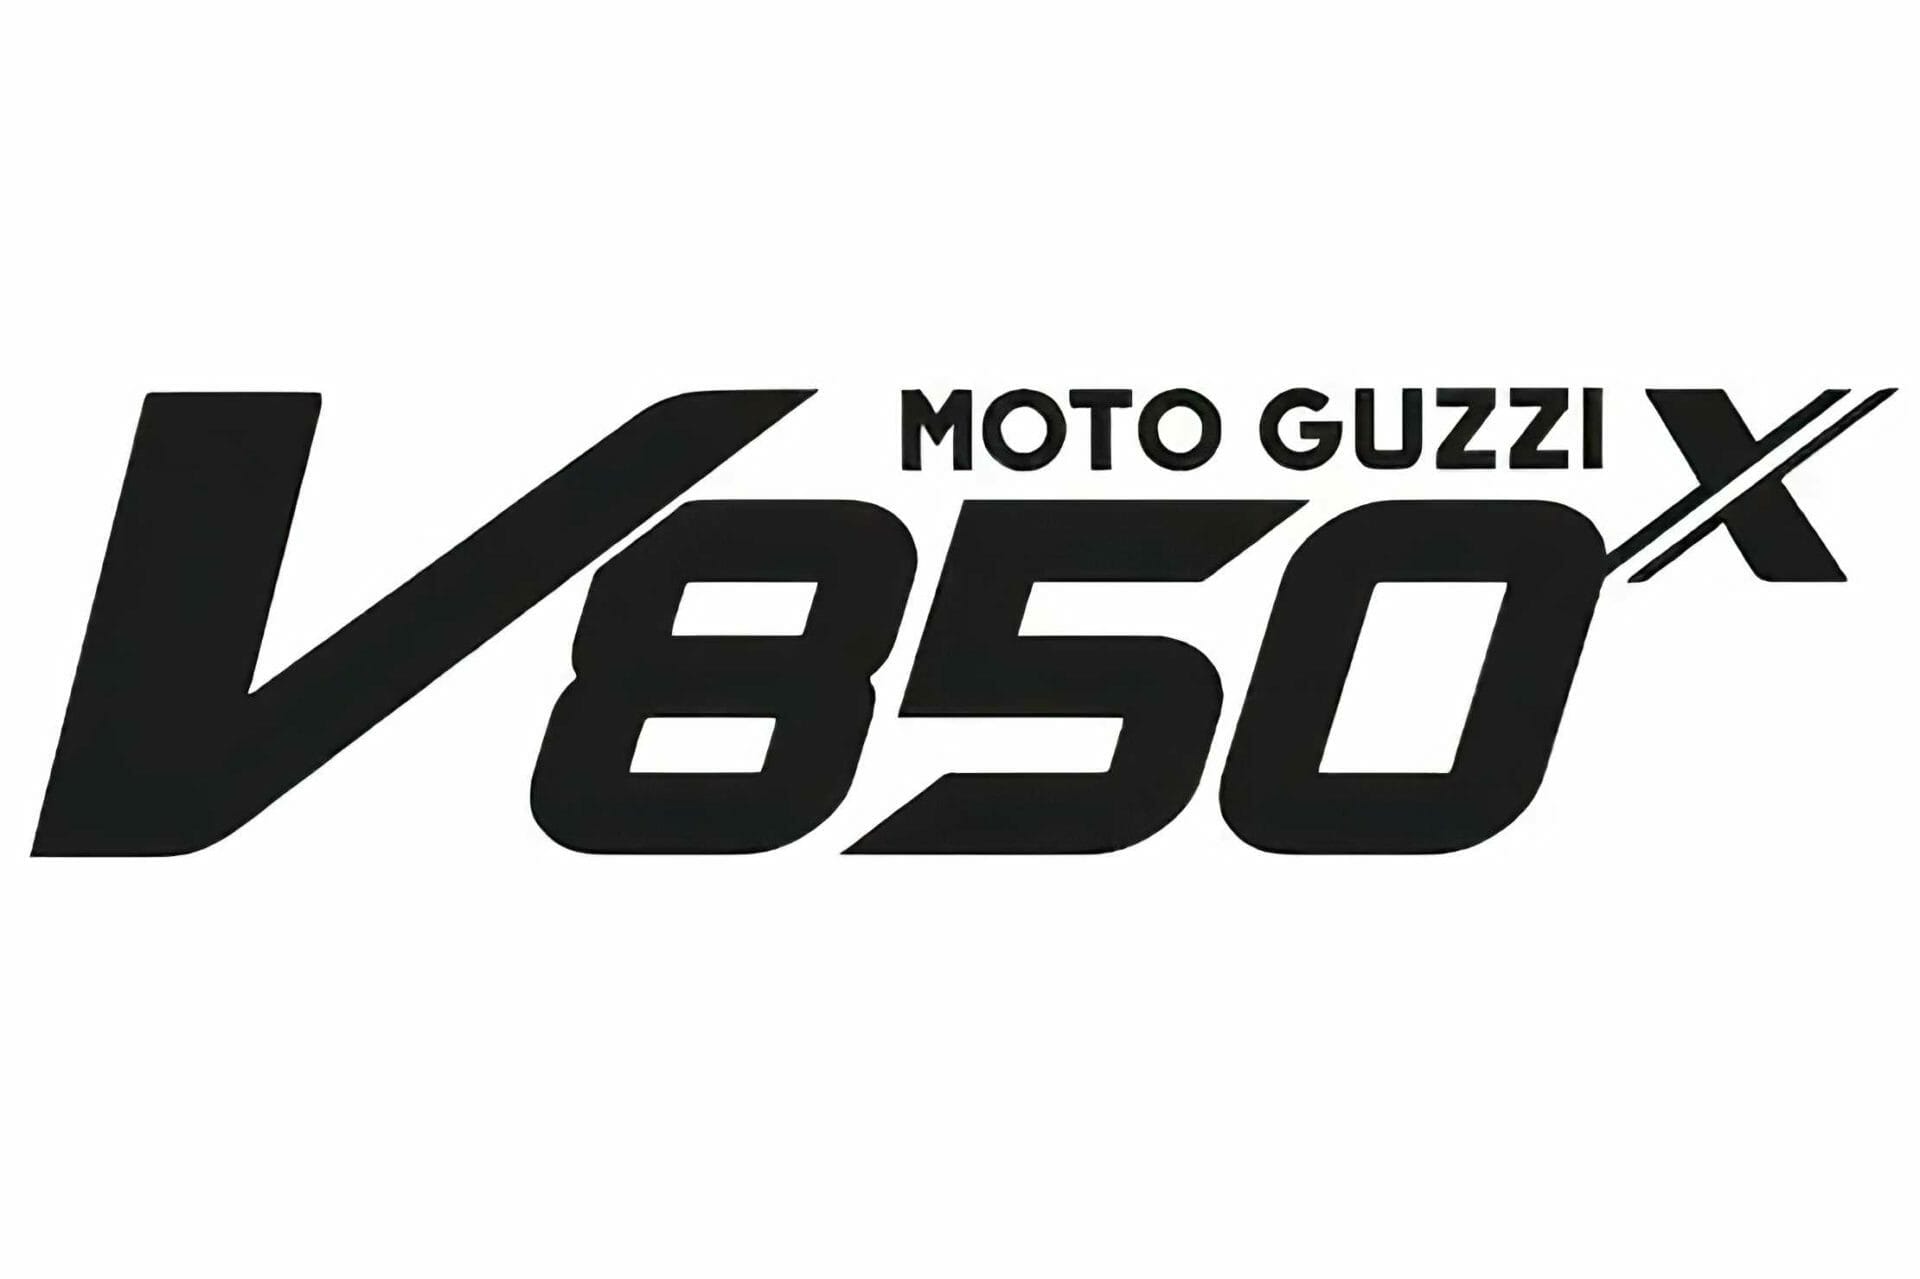 Moto Guzzi V850X - details leaked - MOTORCYCLES.NEWS